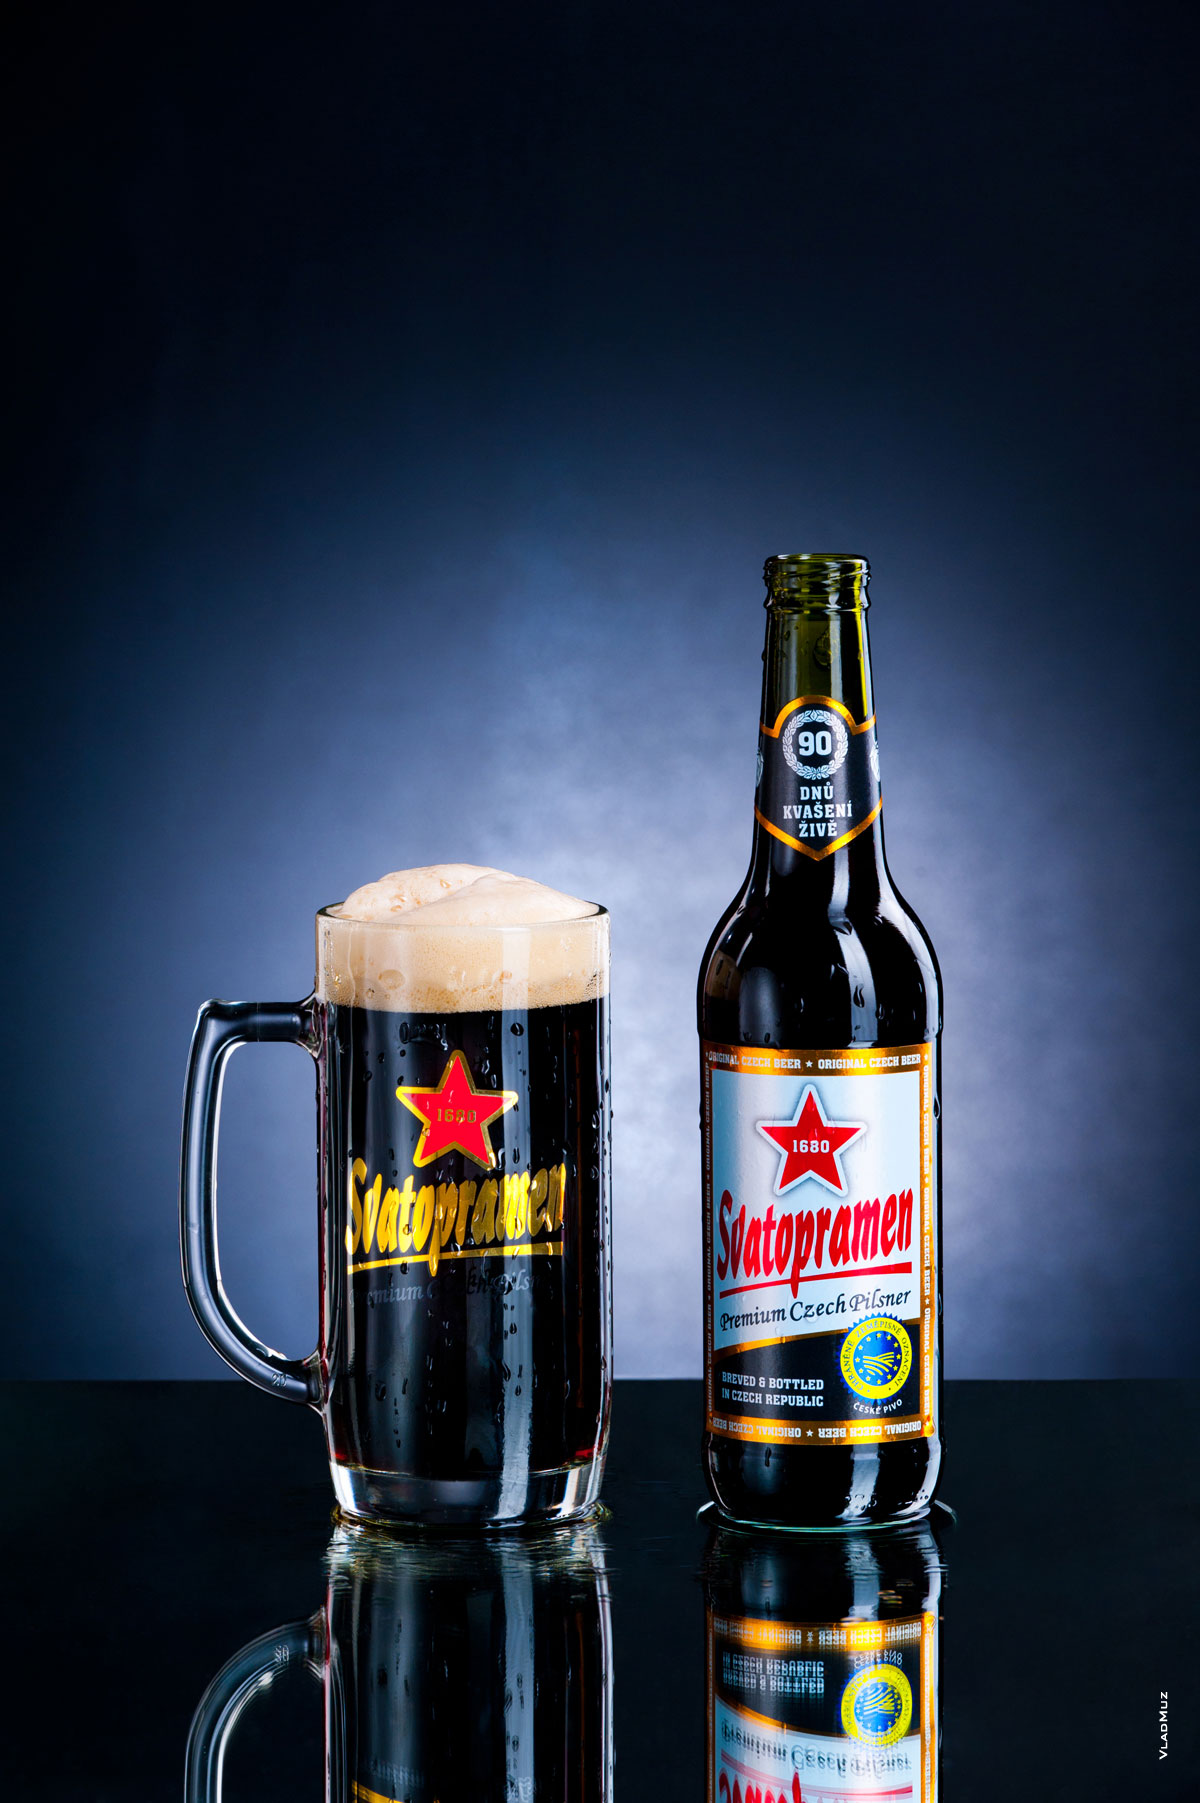 Рекламная фотография темного пива «Святопрамен»: кружка с пивом и бутылка